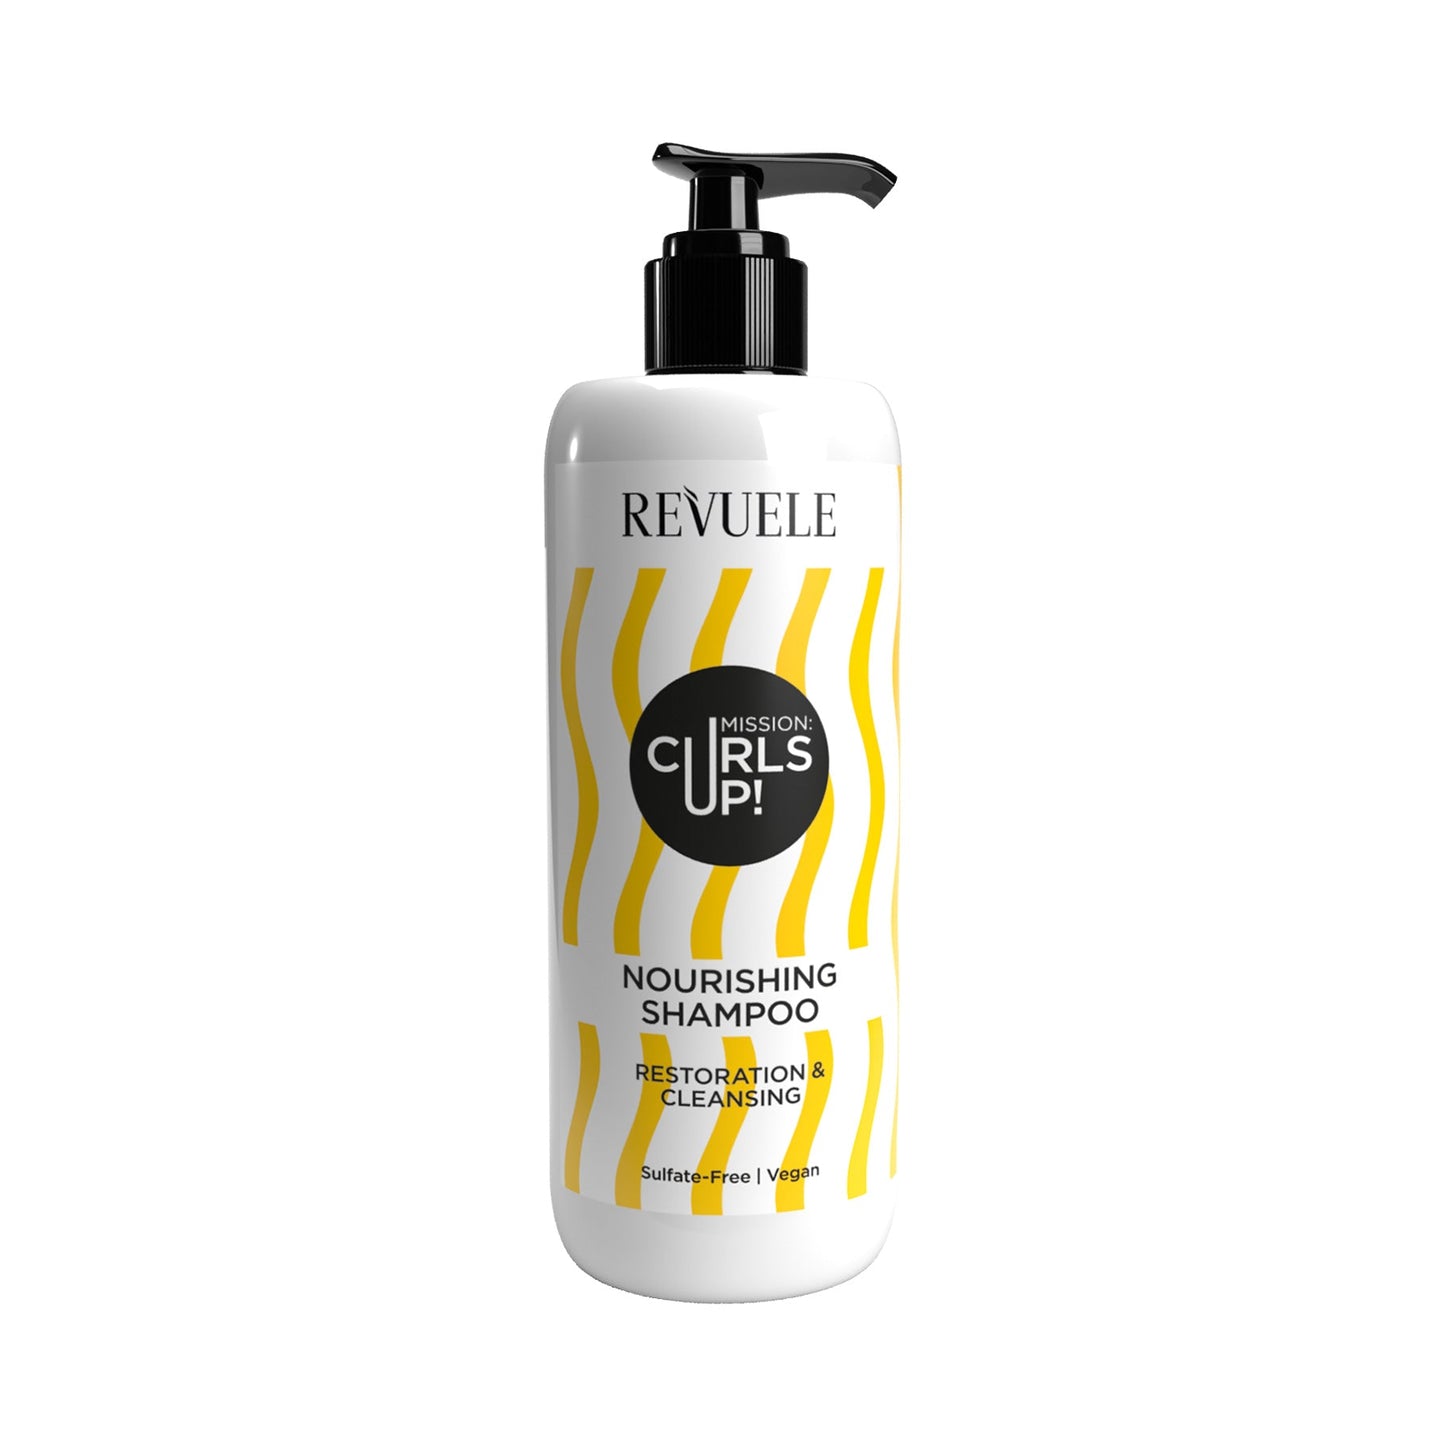 Revuele Mission: Curls up! Nourishing Shampoo